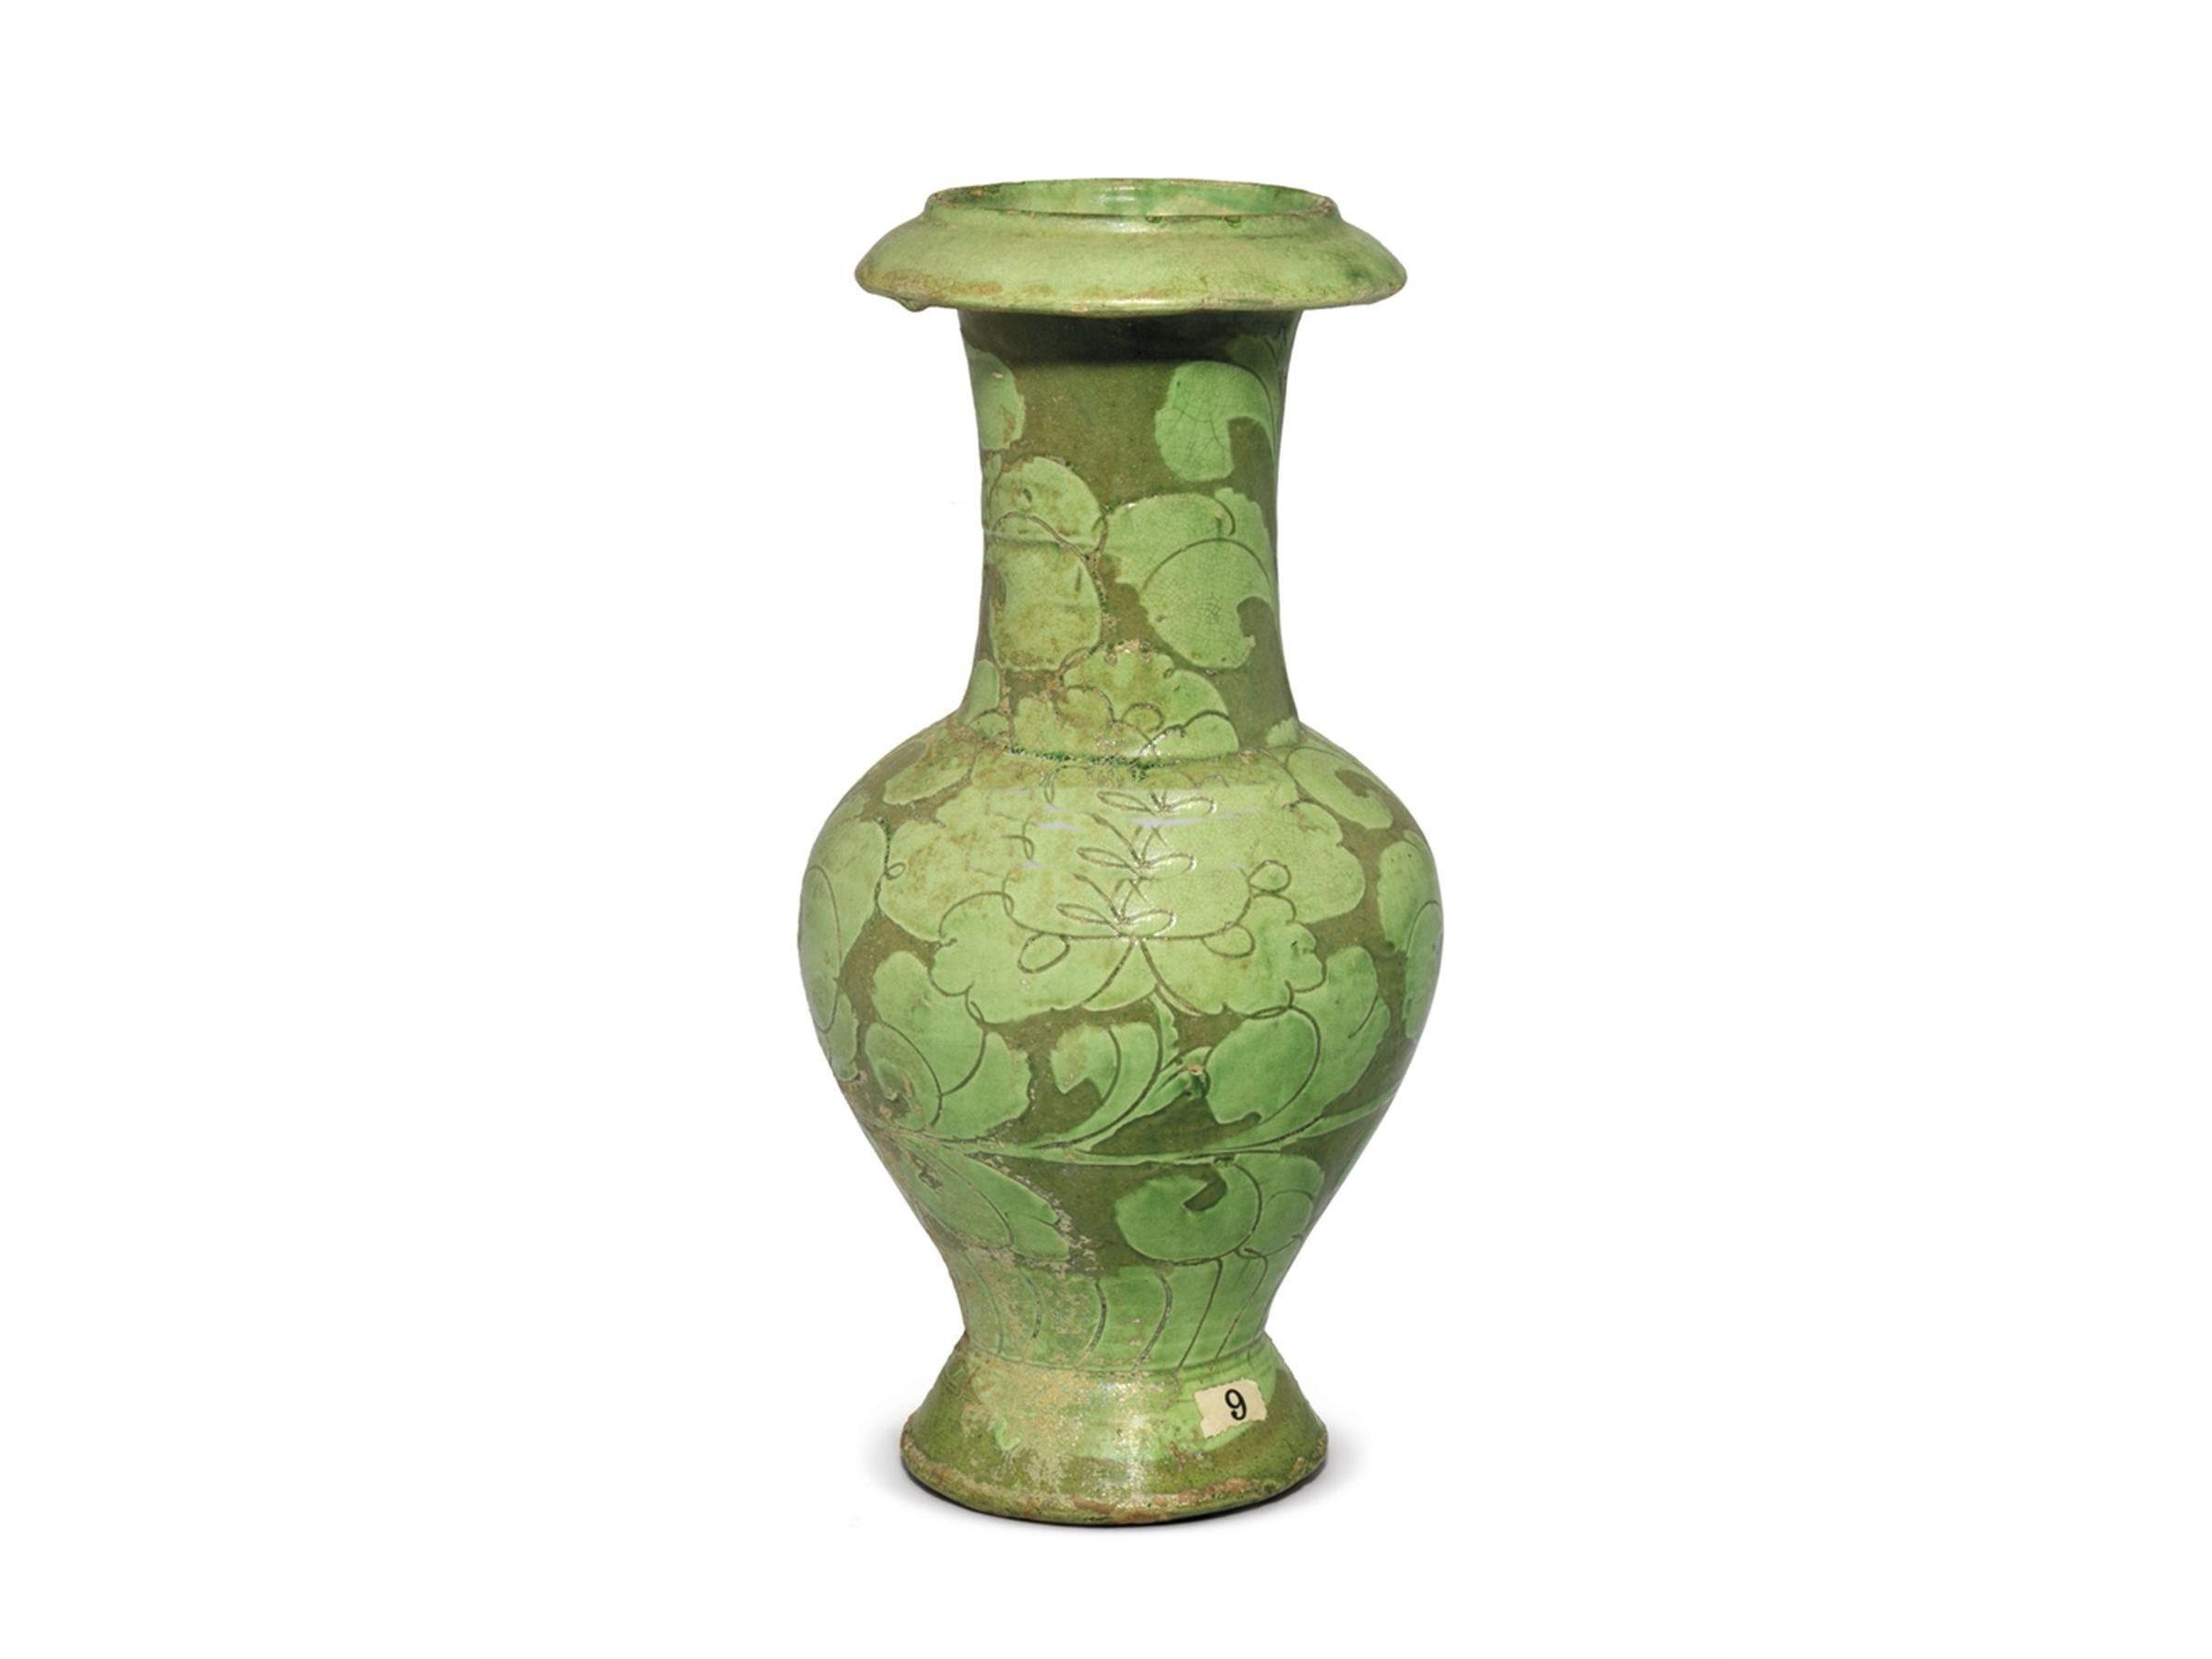 SALE商品 宋磁州窯緑釉刻牡丹花双龍尊瓶古いものコレクション 正規輸入 